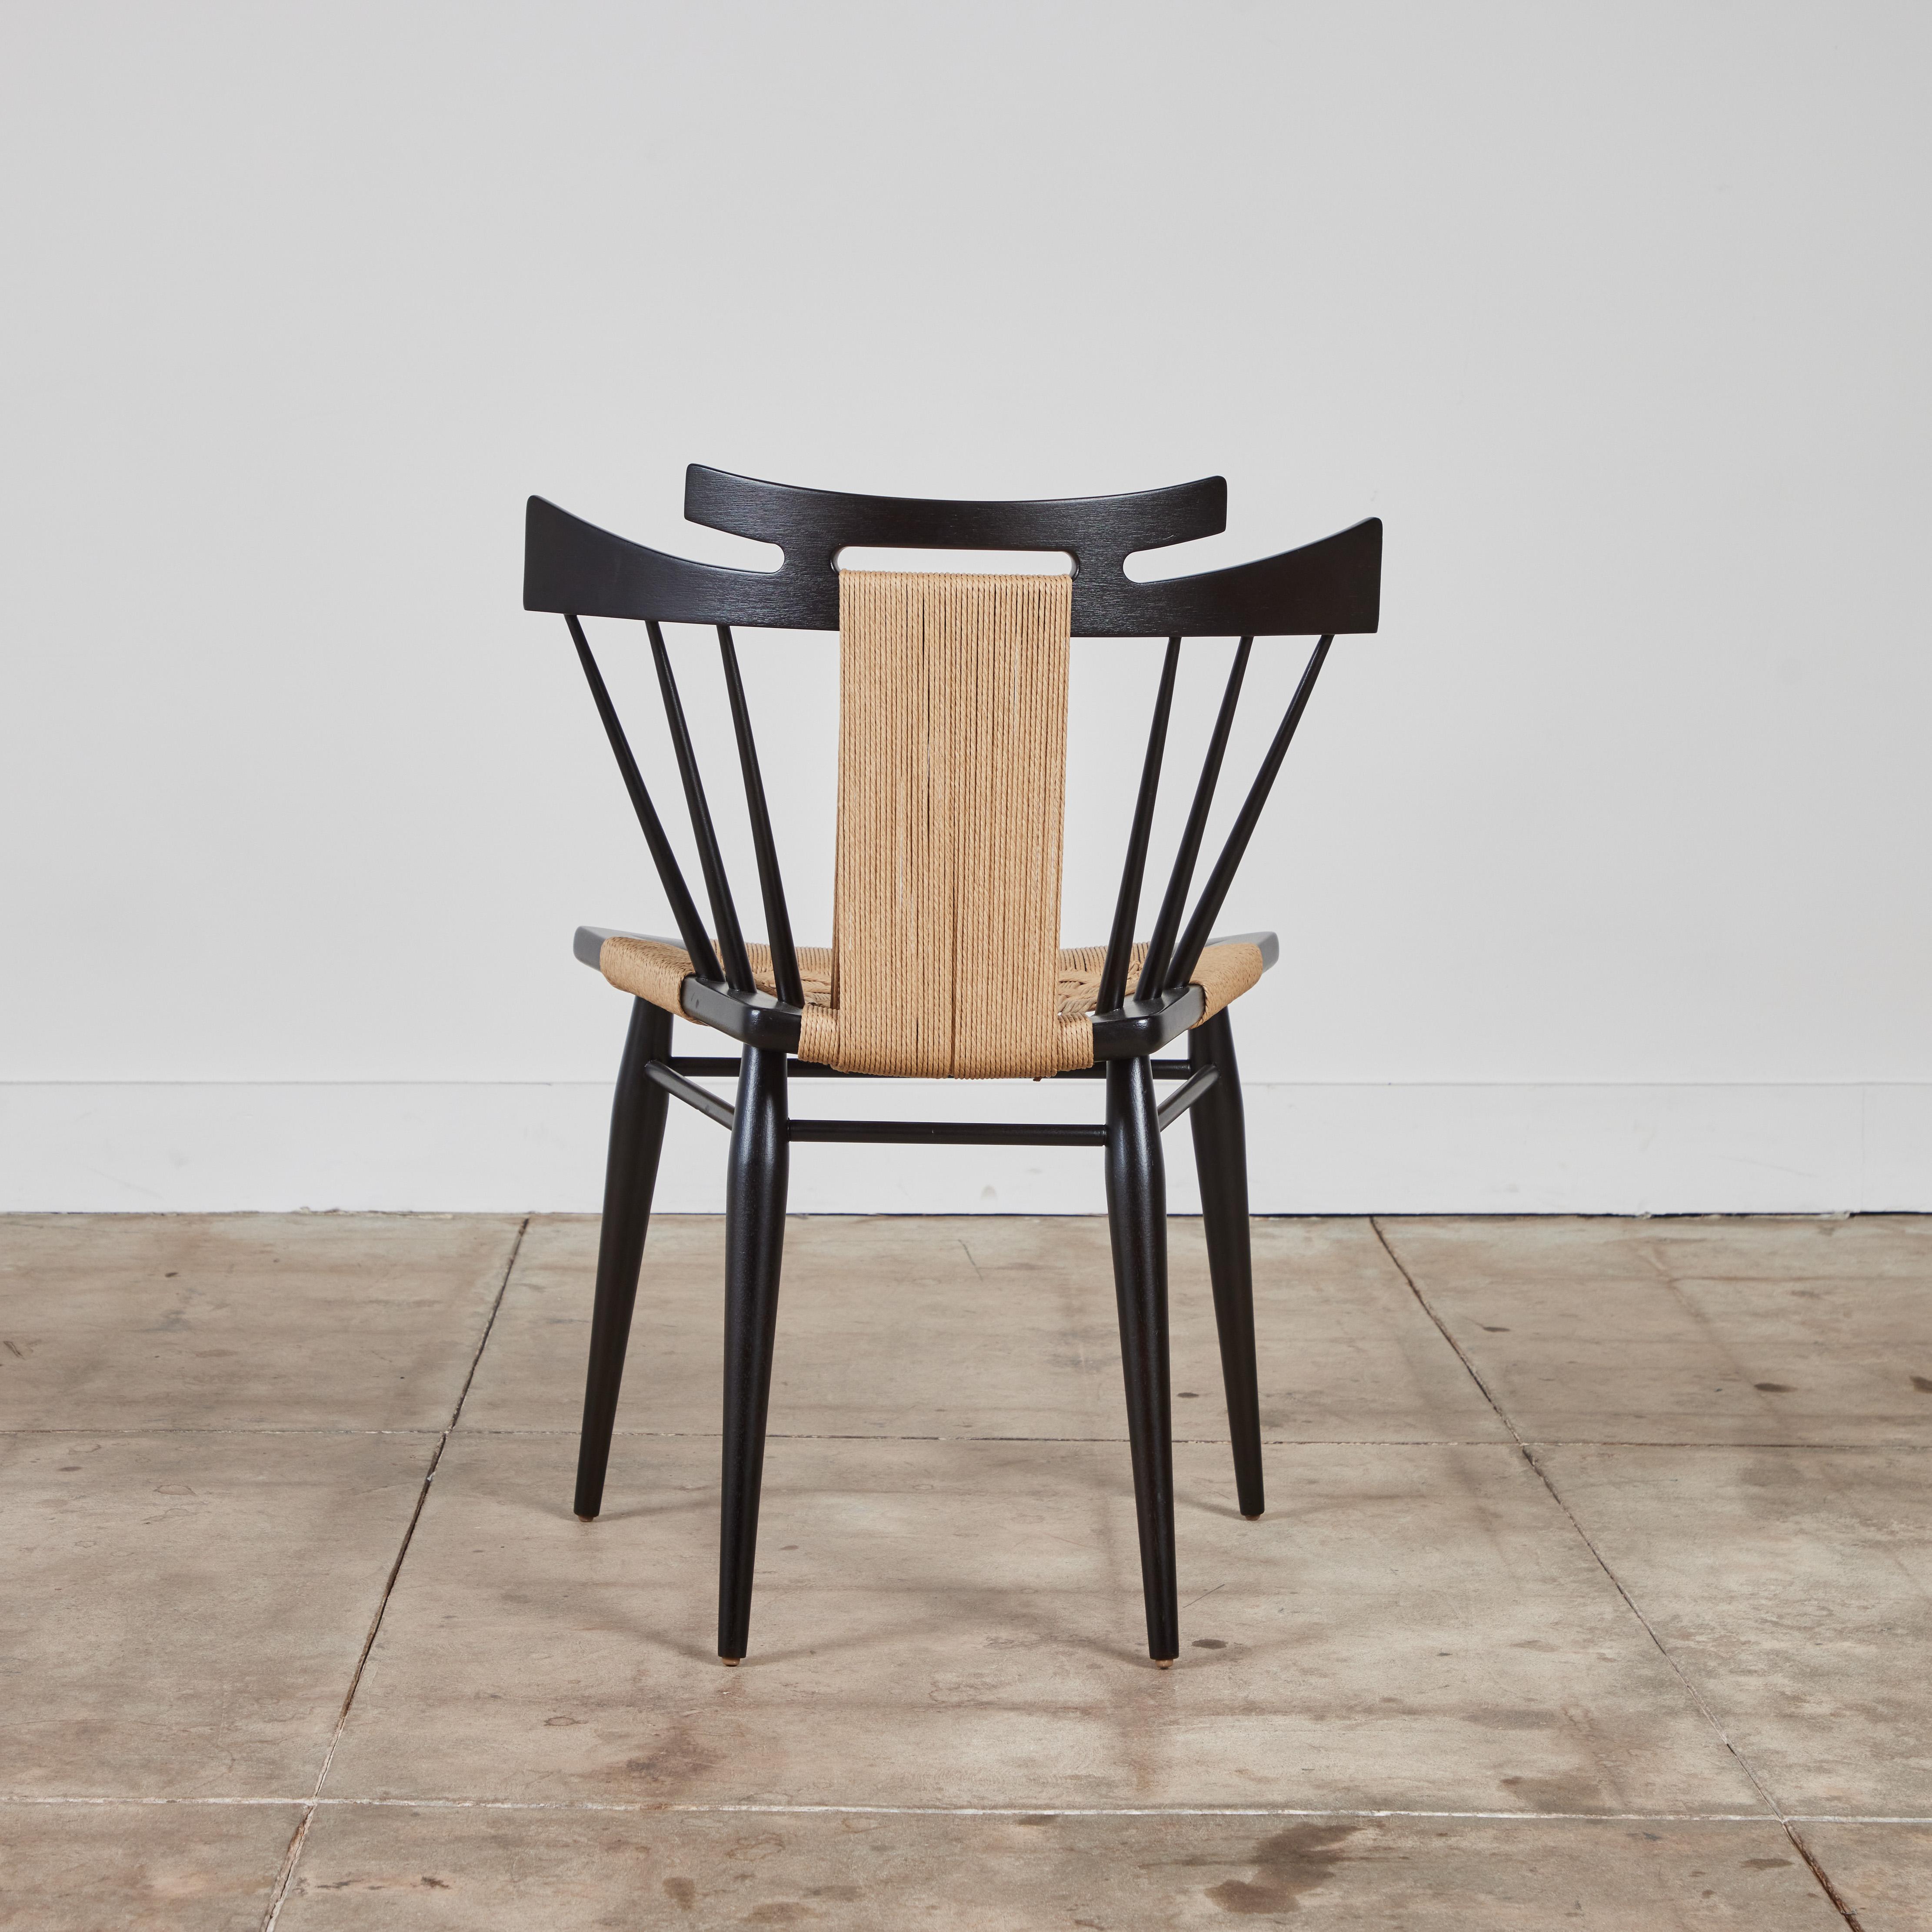 Papercord Edmond Spence “Yucatan” Chair